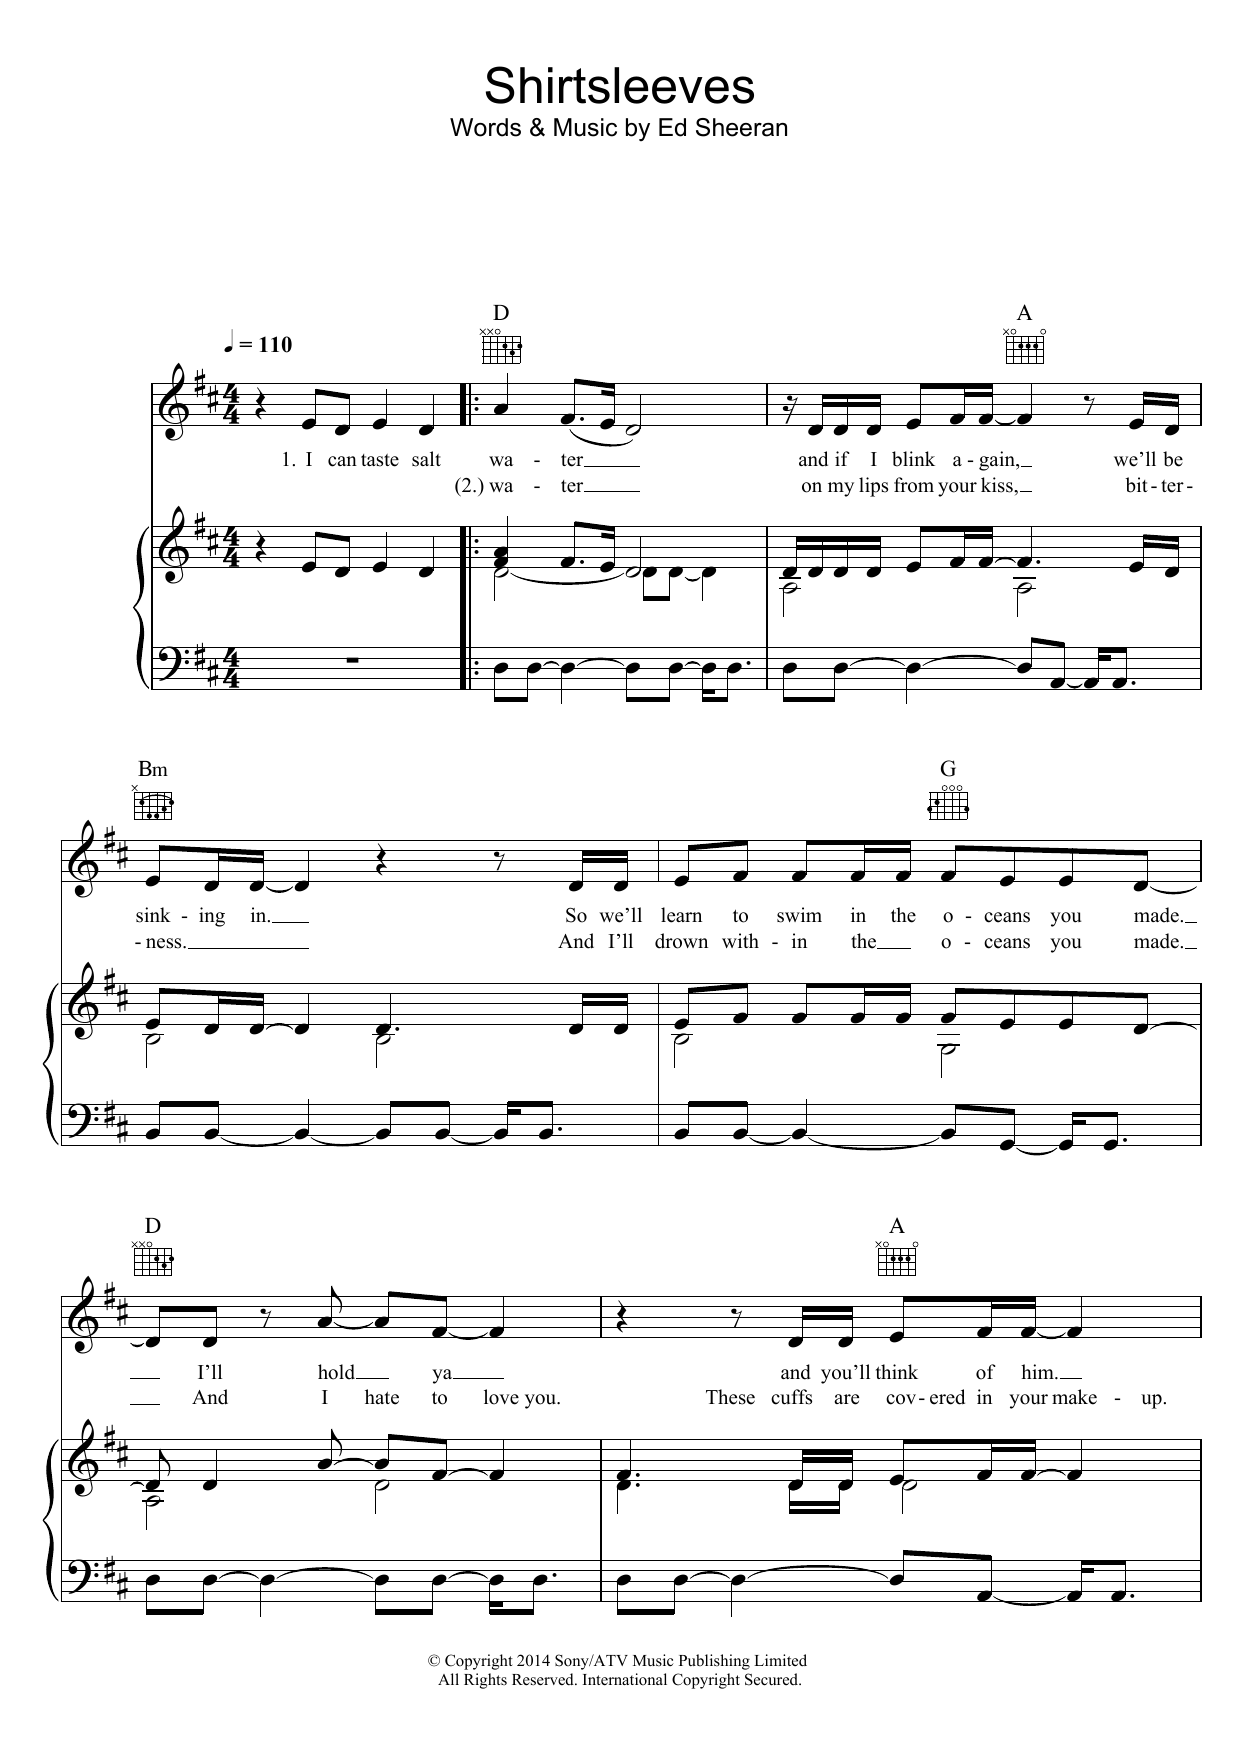 Ed Sheeran Shirtsleeves Sheet Music Notes & Chords for Piano, Vocal & Guitar (Right-Hand Melody) - Download or Print PDF